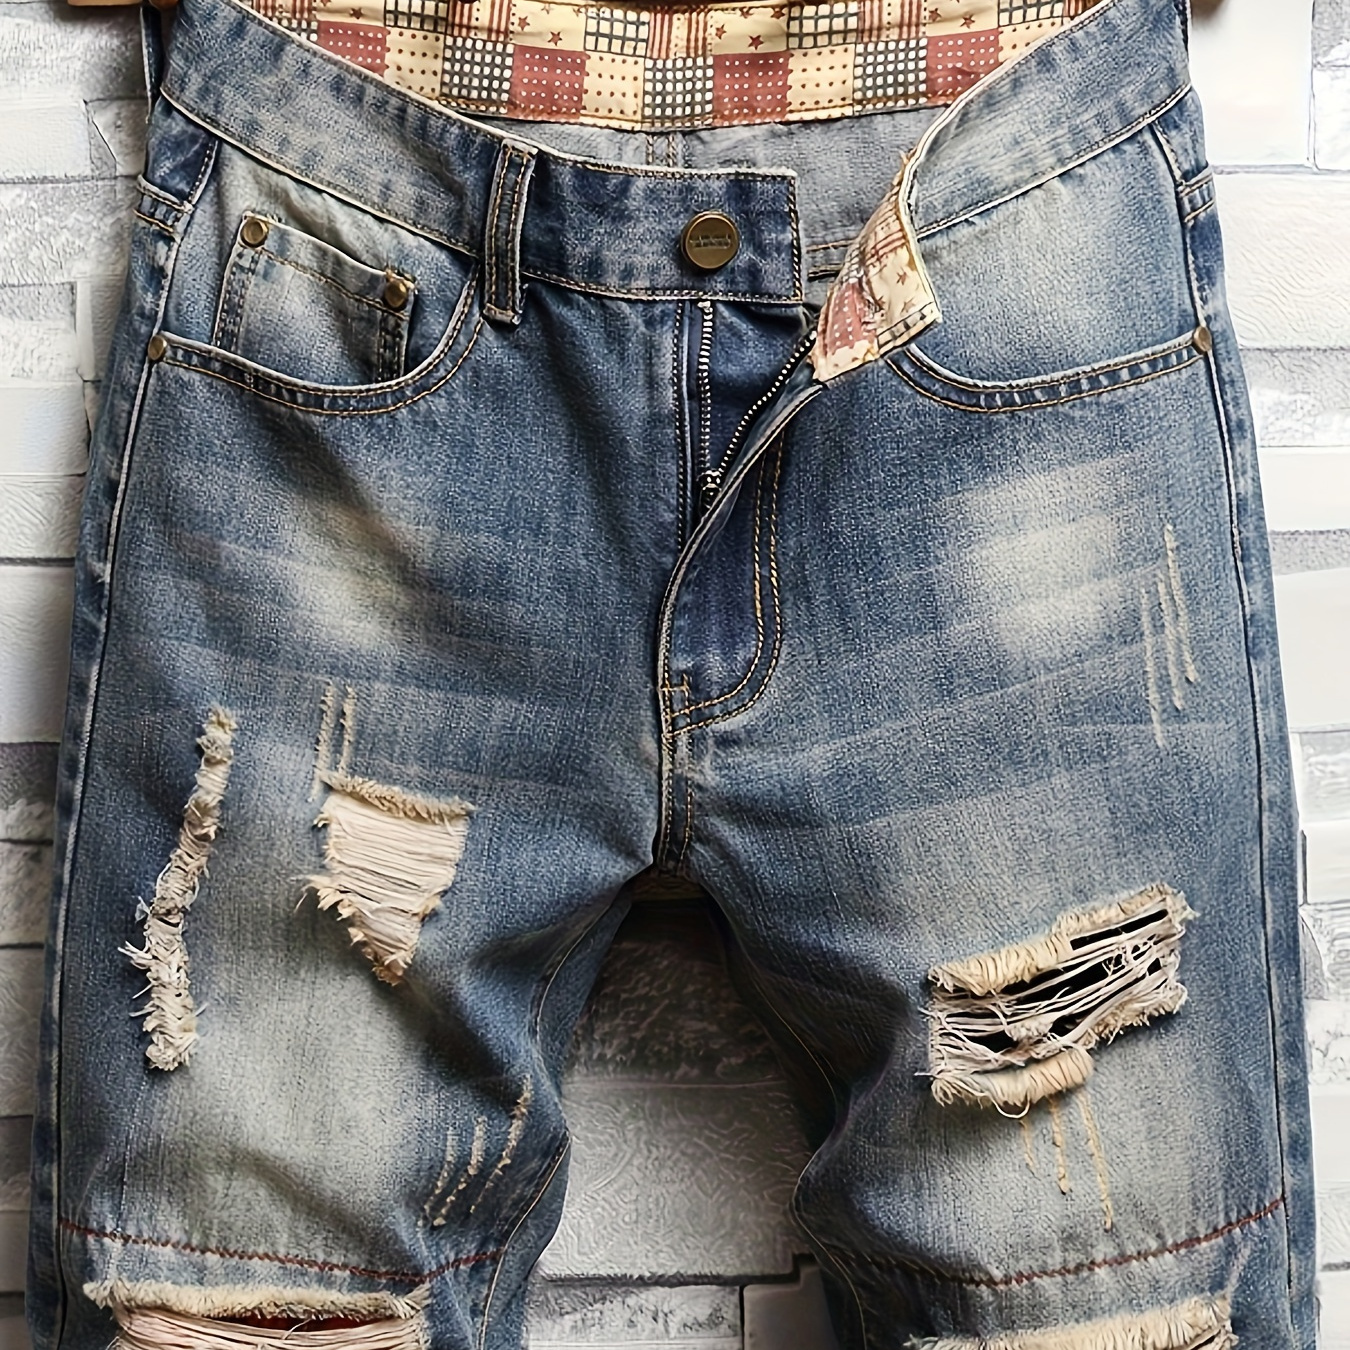 

Men's Casual Stylish Ripped Denim Shorts, Knee-length Jorts With Pockets, Summer Street Style Fashion